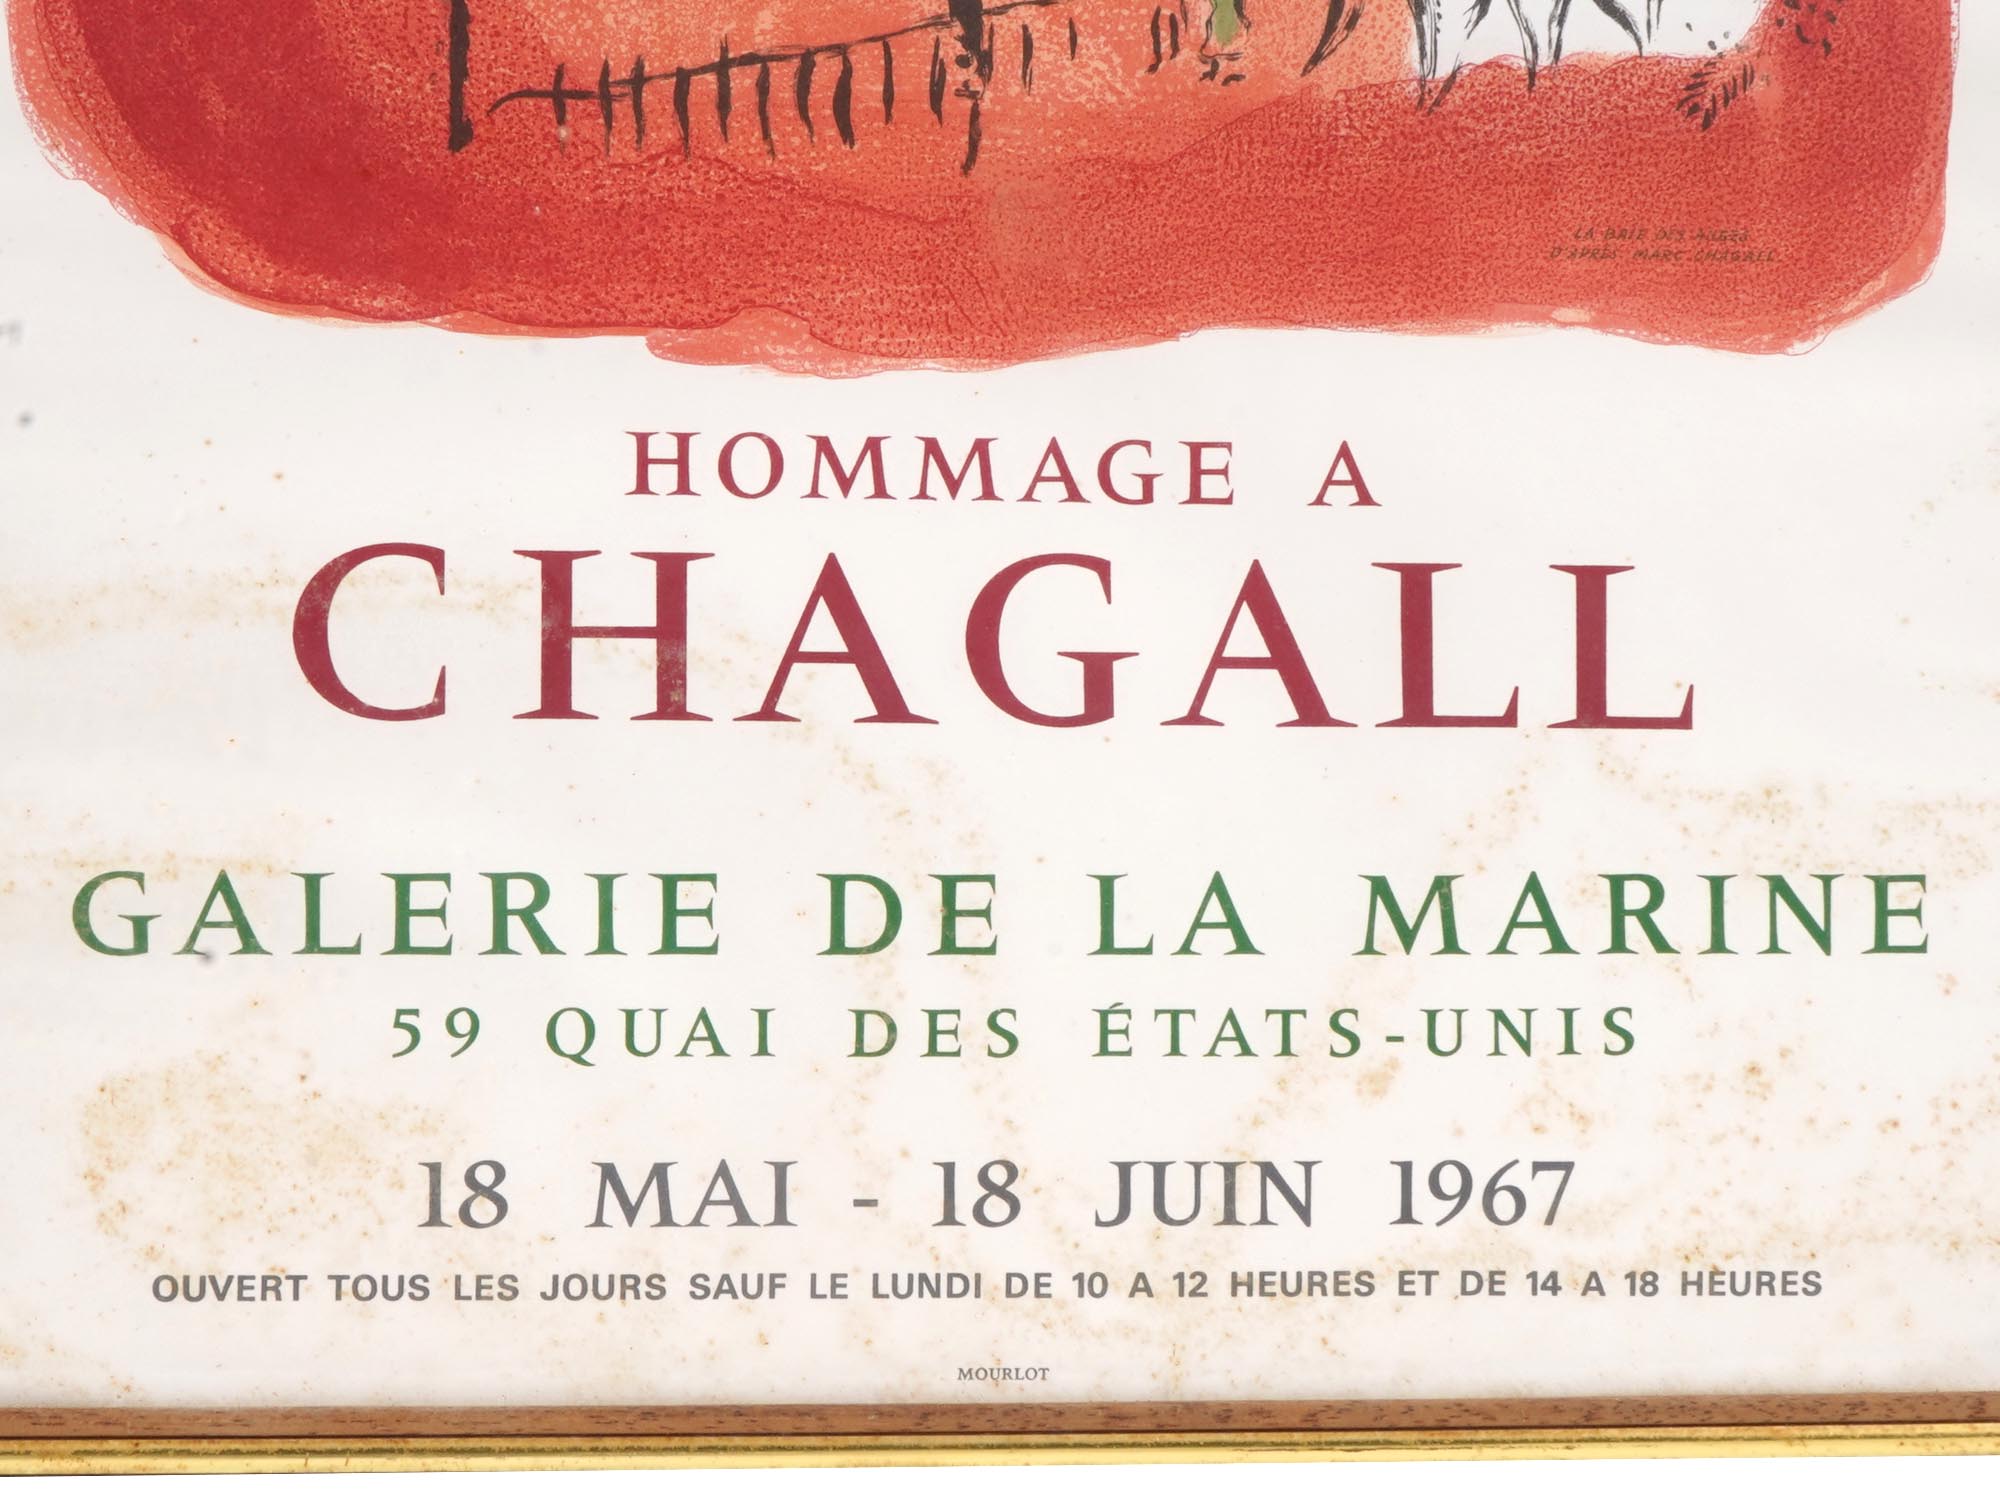 GALERIE DE LA MARINE MARC CHAGALL EXHIBITION POSTER PIC-6